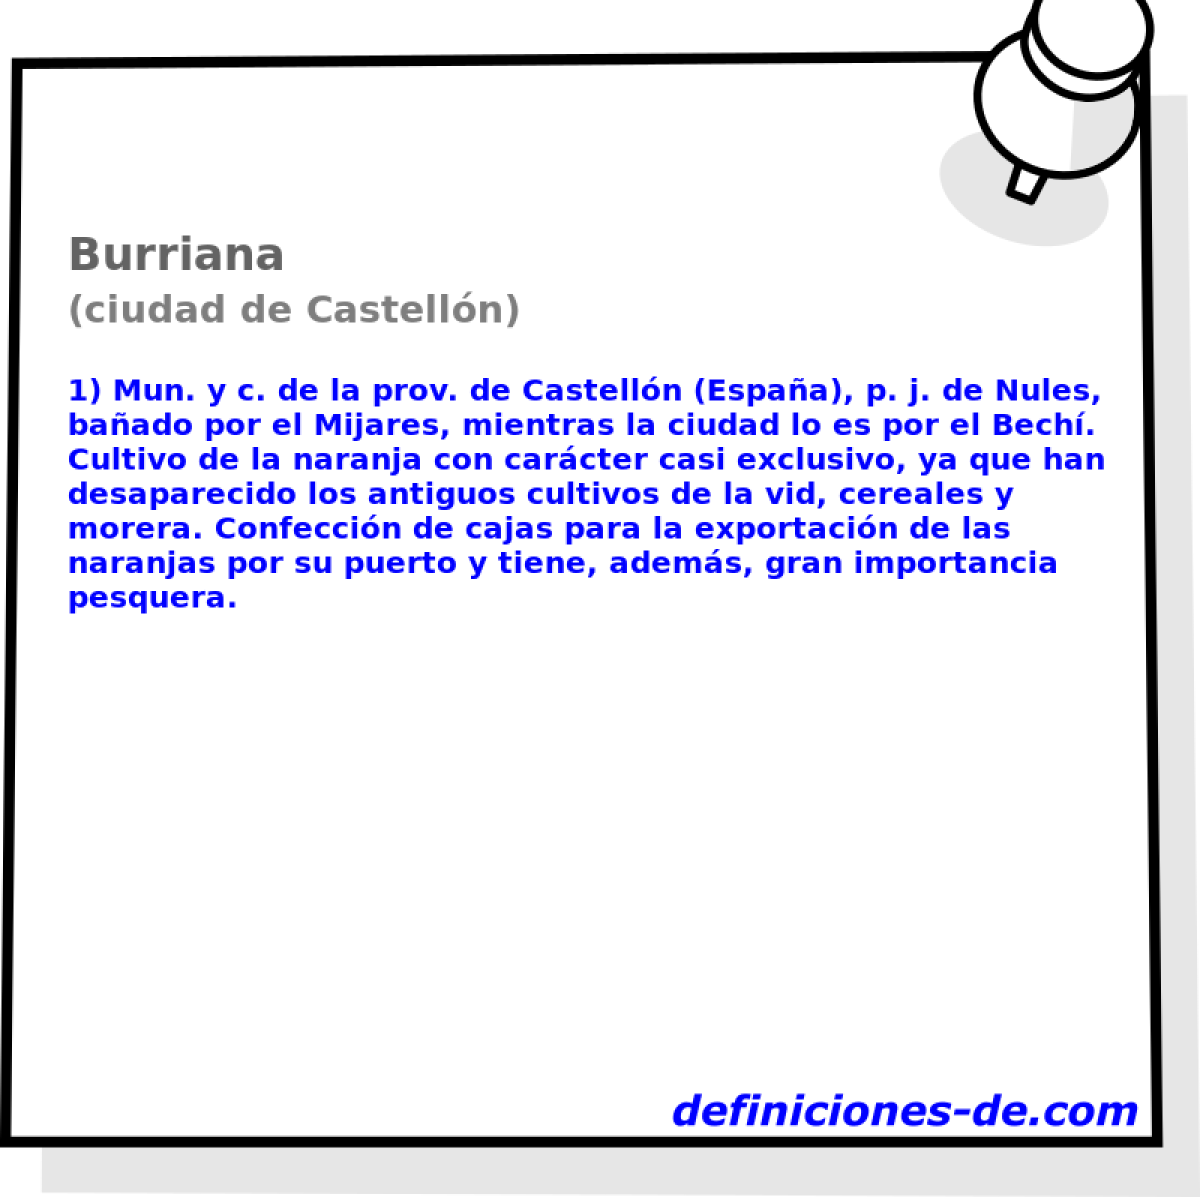 Burriana (ciudad de Castelln)